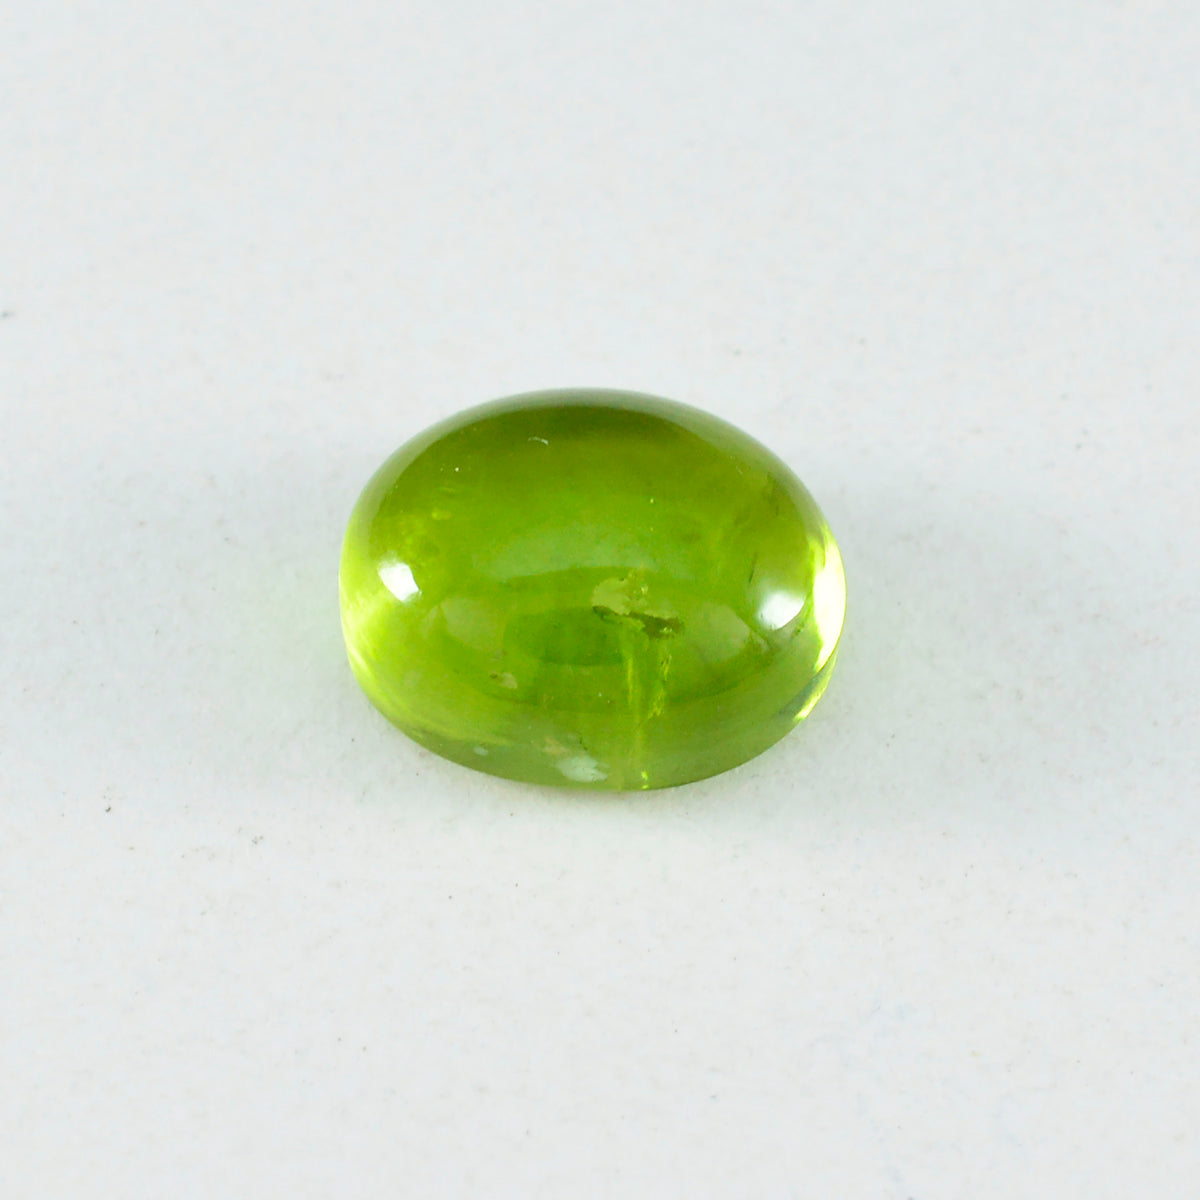 Riyogems 1PC groene peridot cabochon 12x16 mm ovale vorm zoete kwaliteitsedelsteen